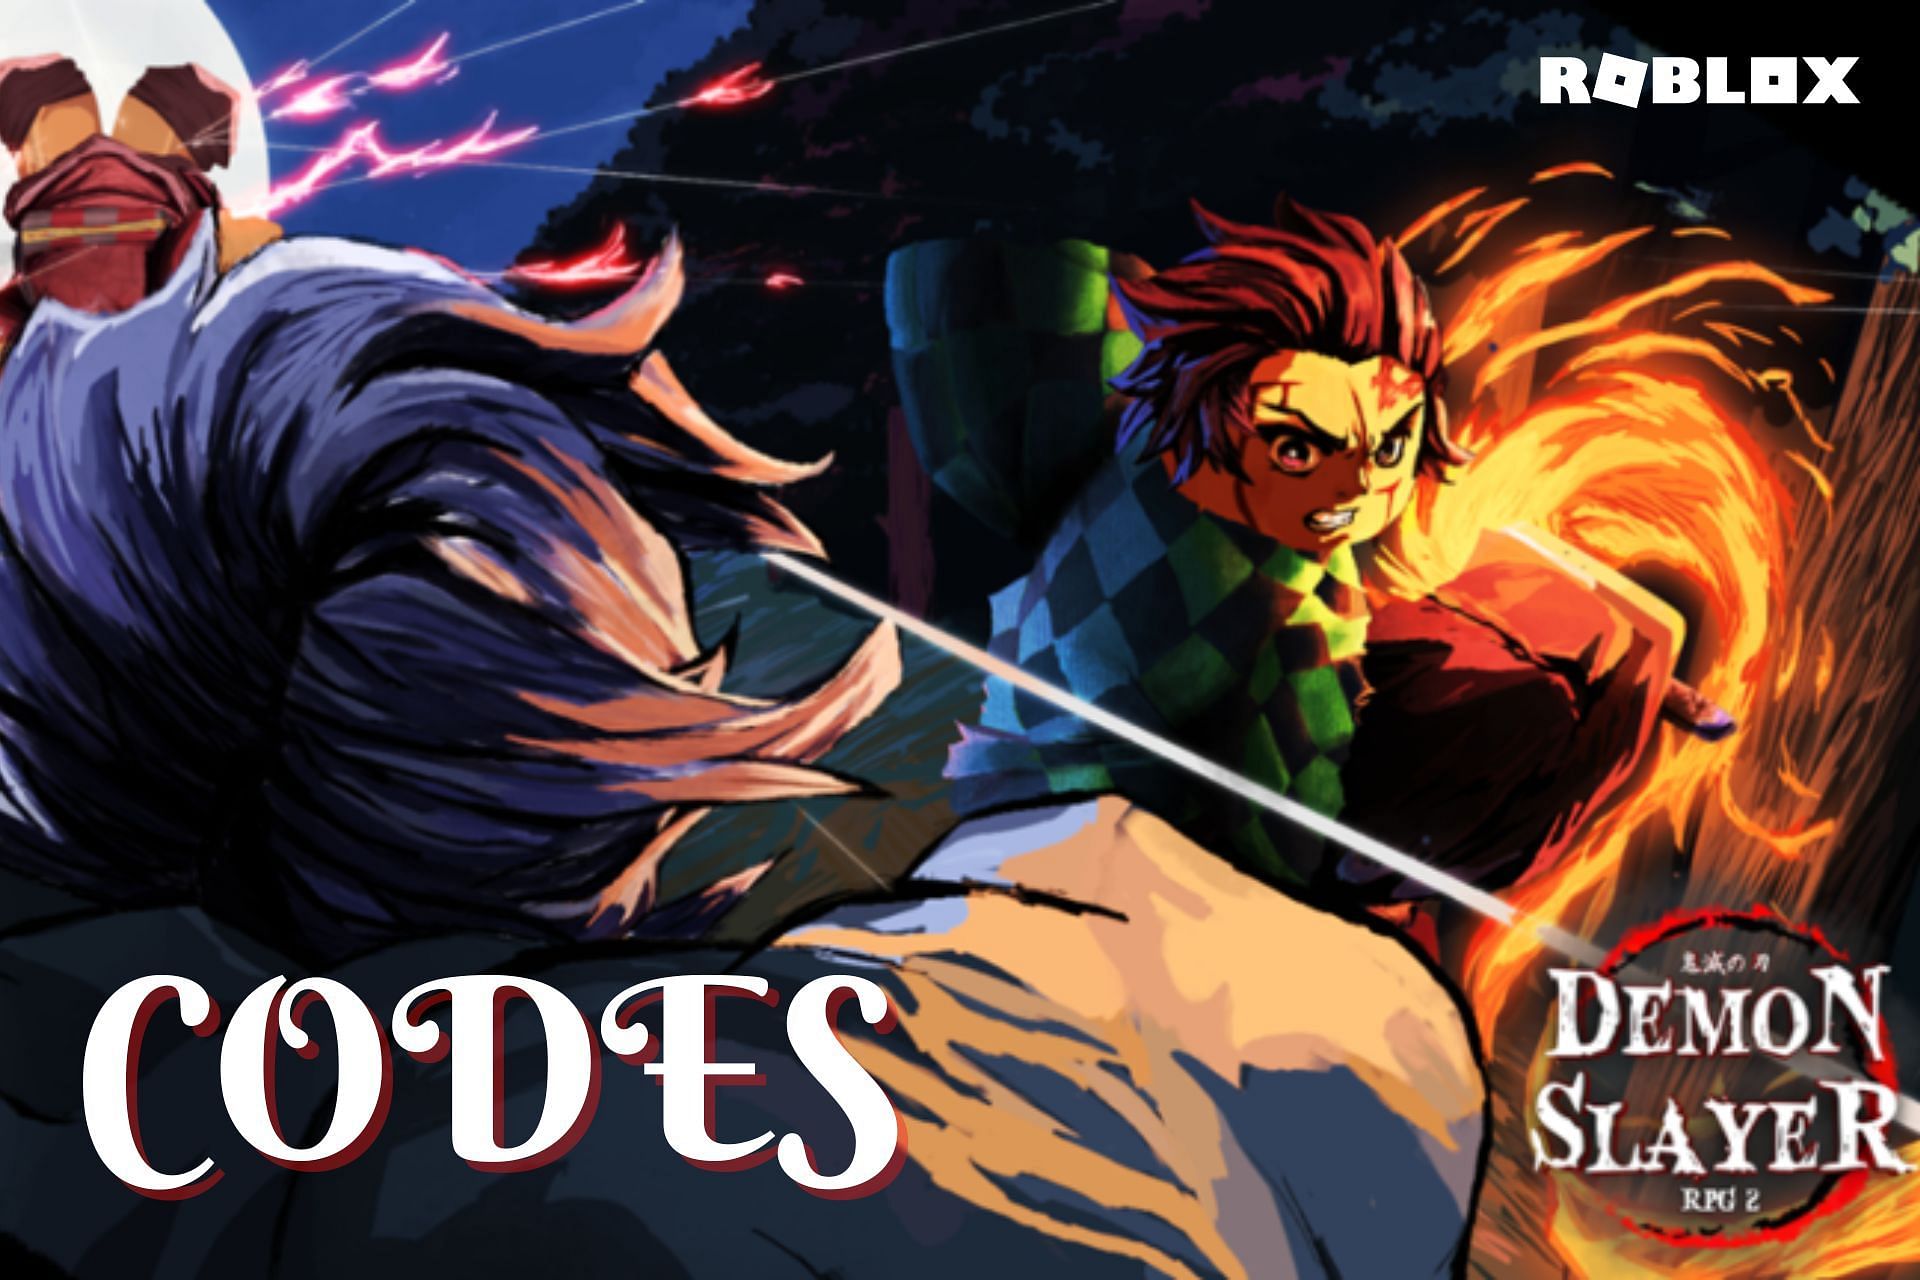 Roblox Demon Slayer RPG 2 codes (November 2022): Free Resets and